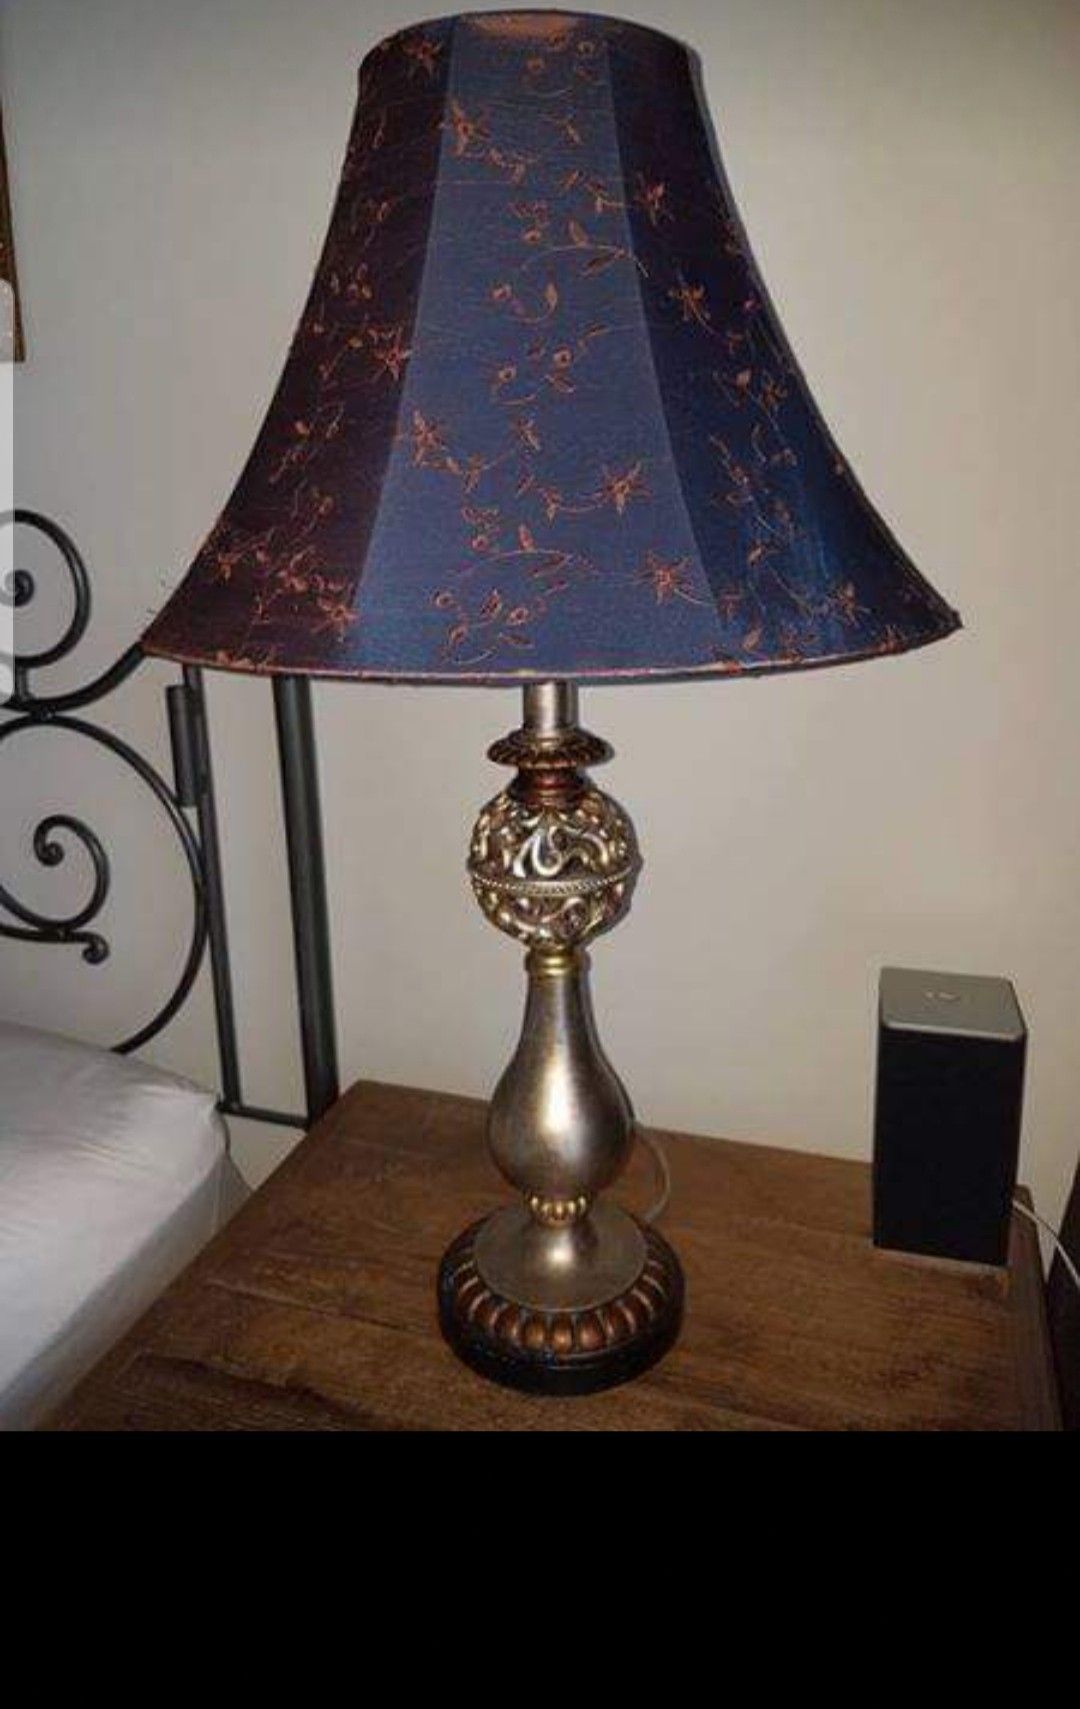 2 Matching Bedside Lamp Shade